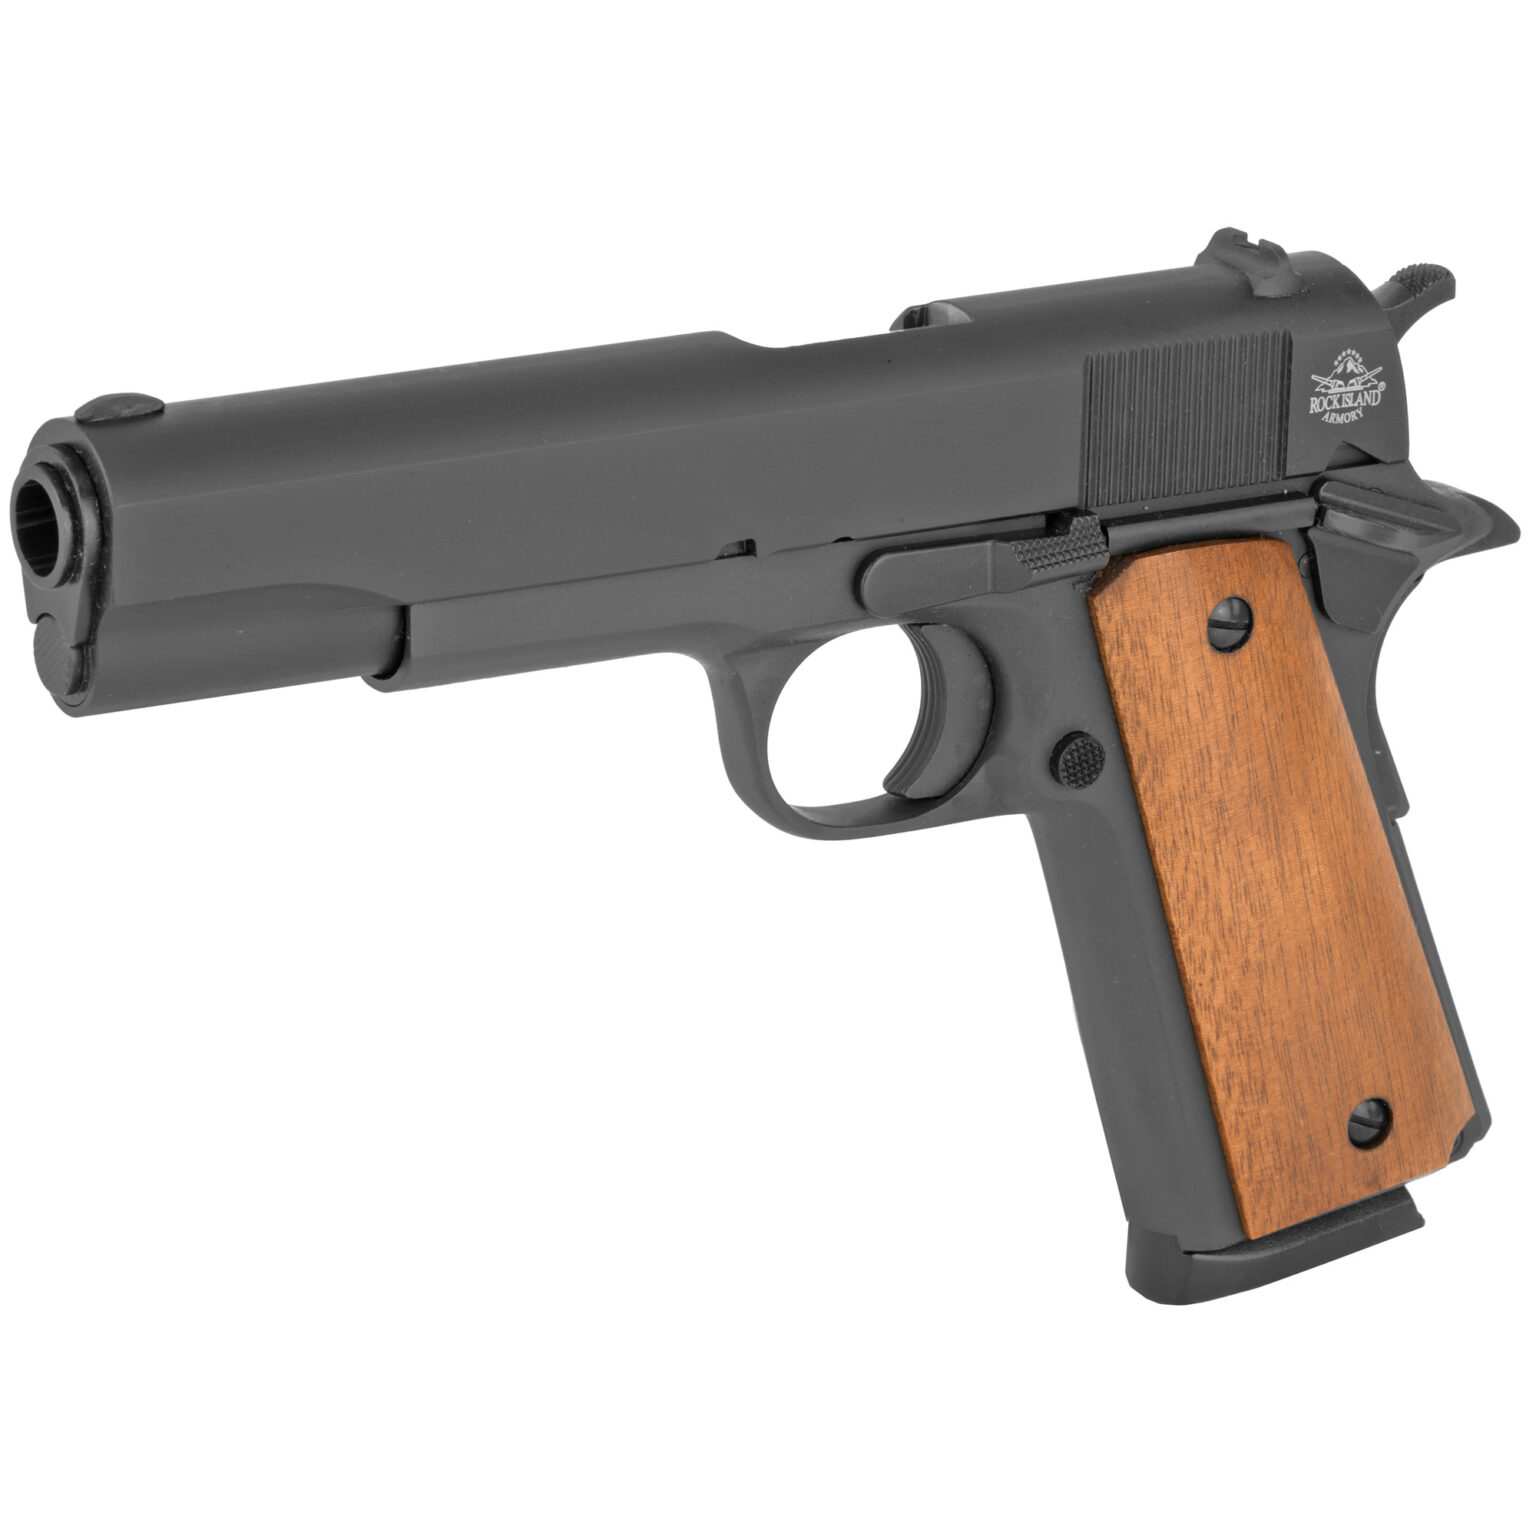 Armscor Rock Island Armory M1911 A1 Gi 1911 45acp Pistol Black Parkerized Finish Wood Grips 5080